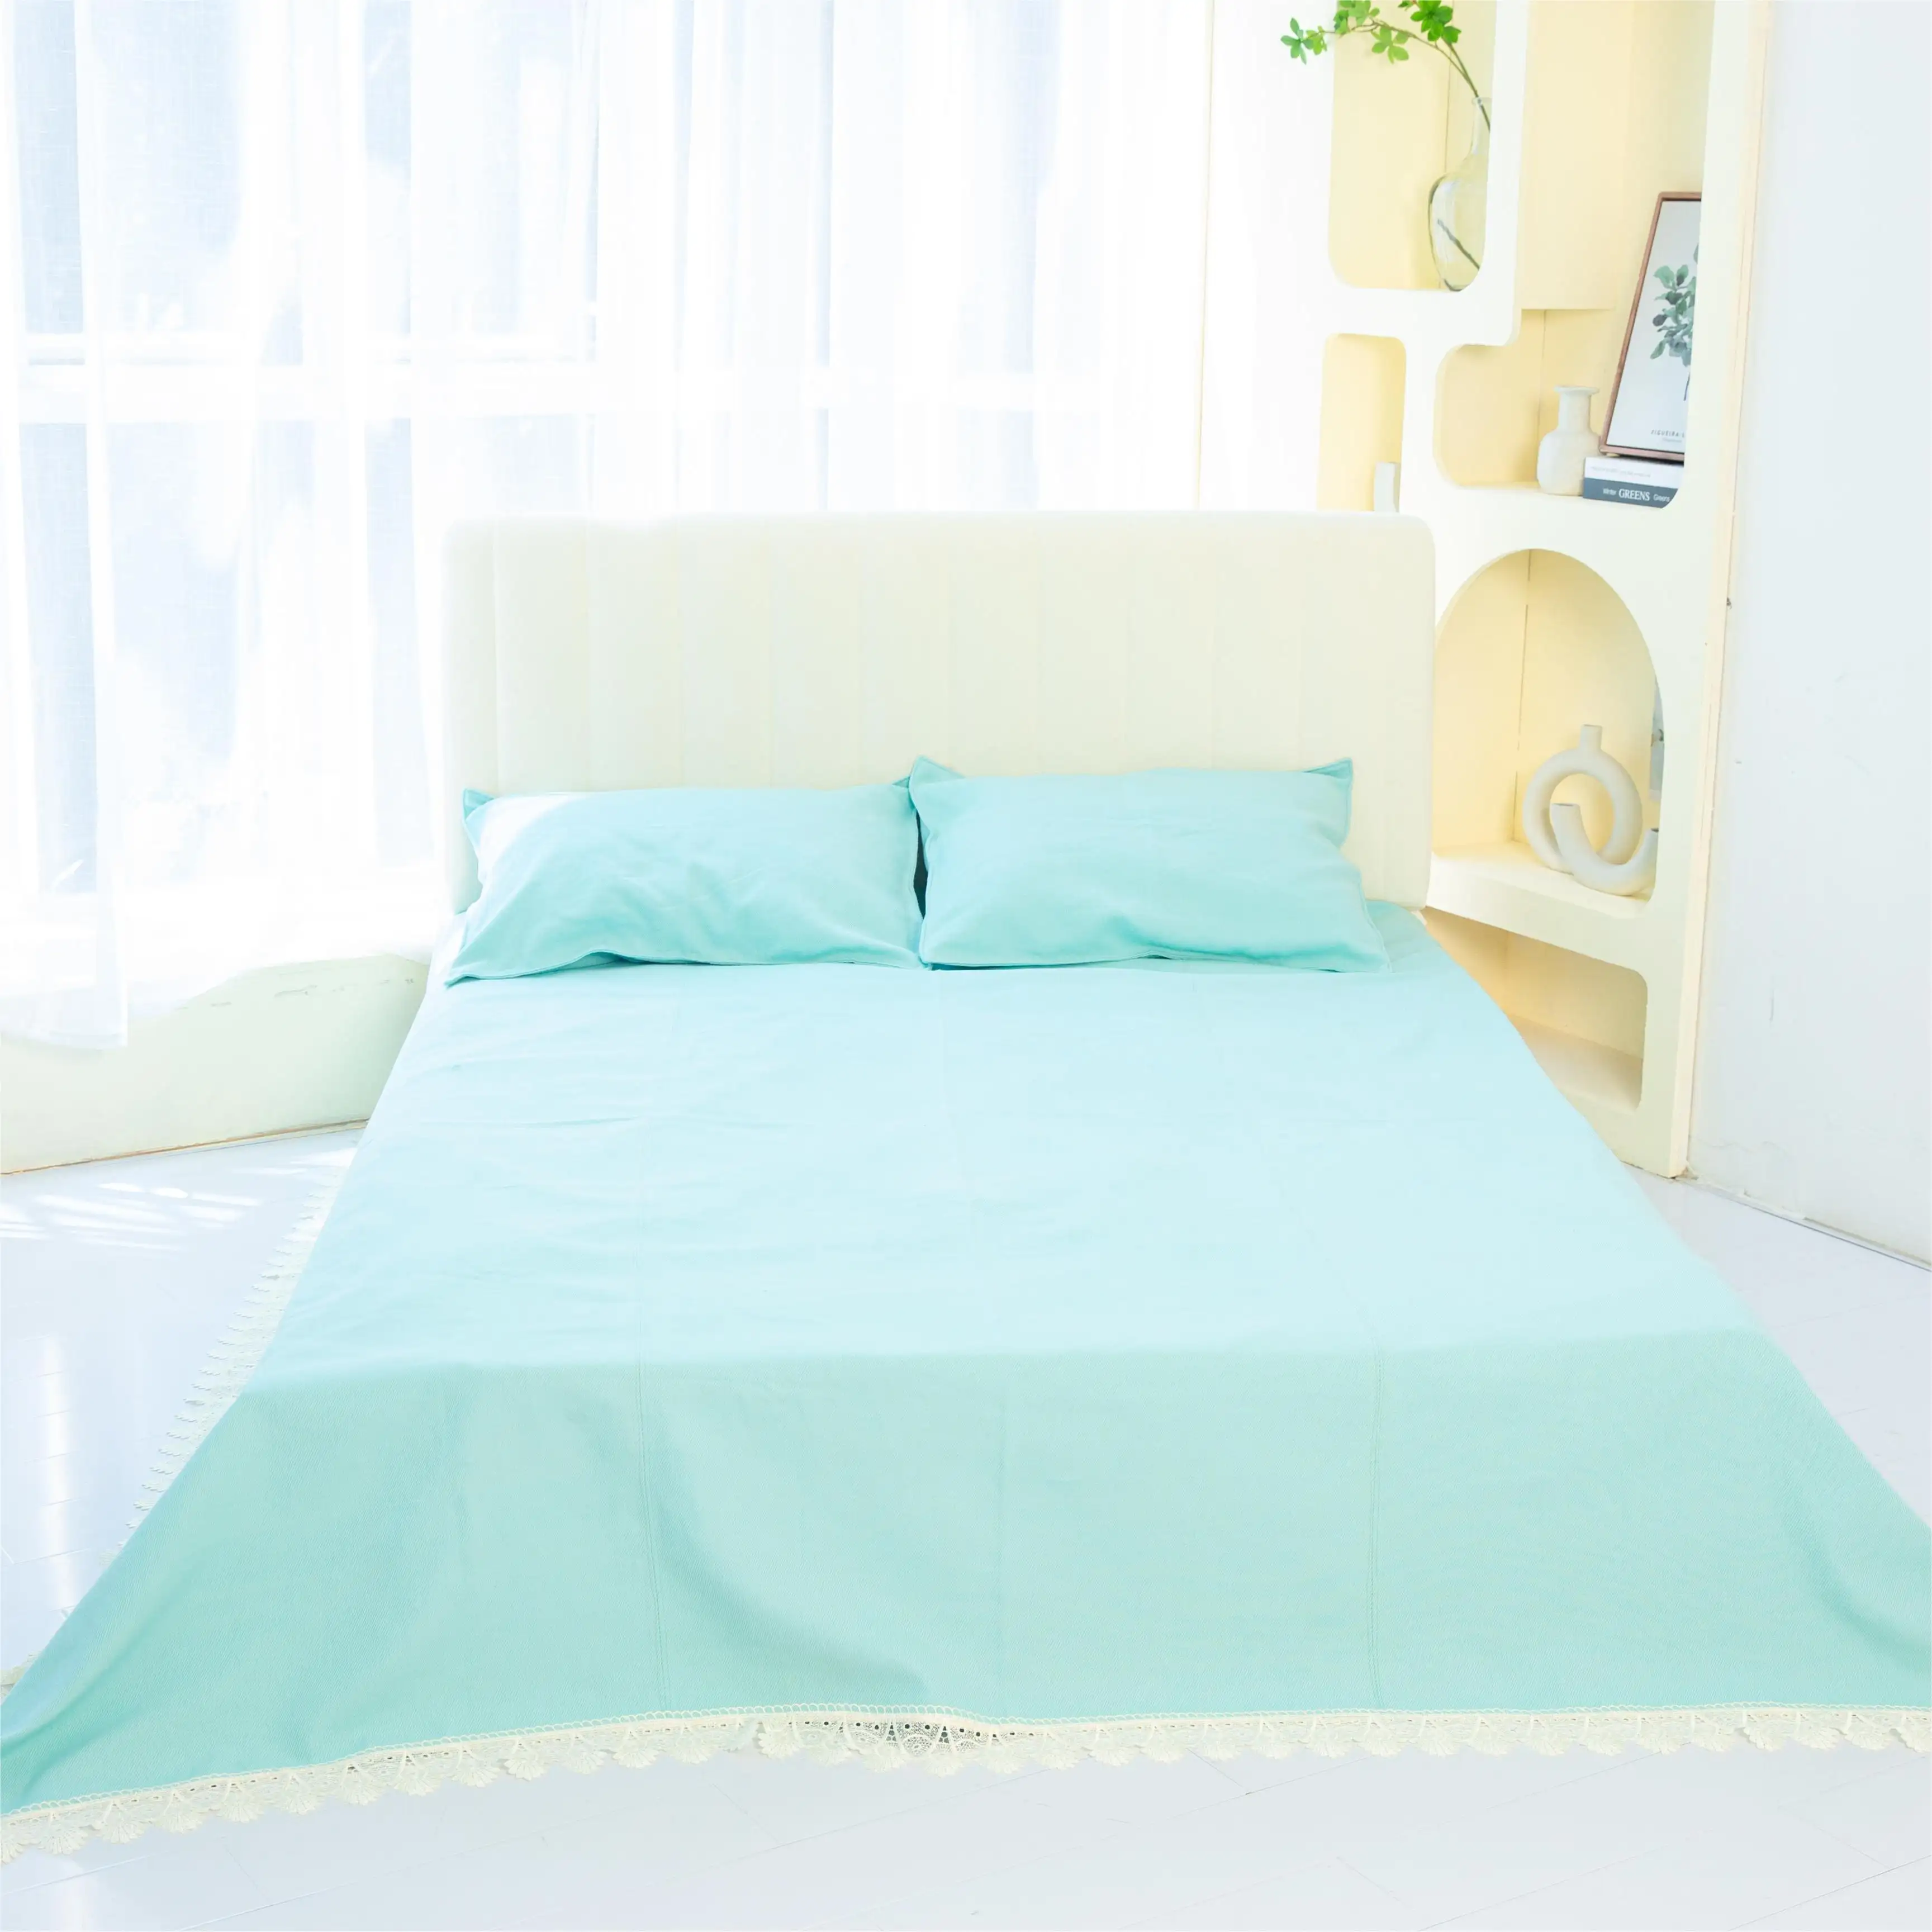 WINATURE Wholesale Blanket Customization Egyptian Cotton Bedding Plain Color Super King Sizes Flat Bed Sheets Set